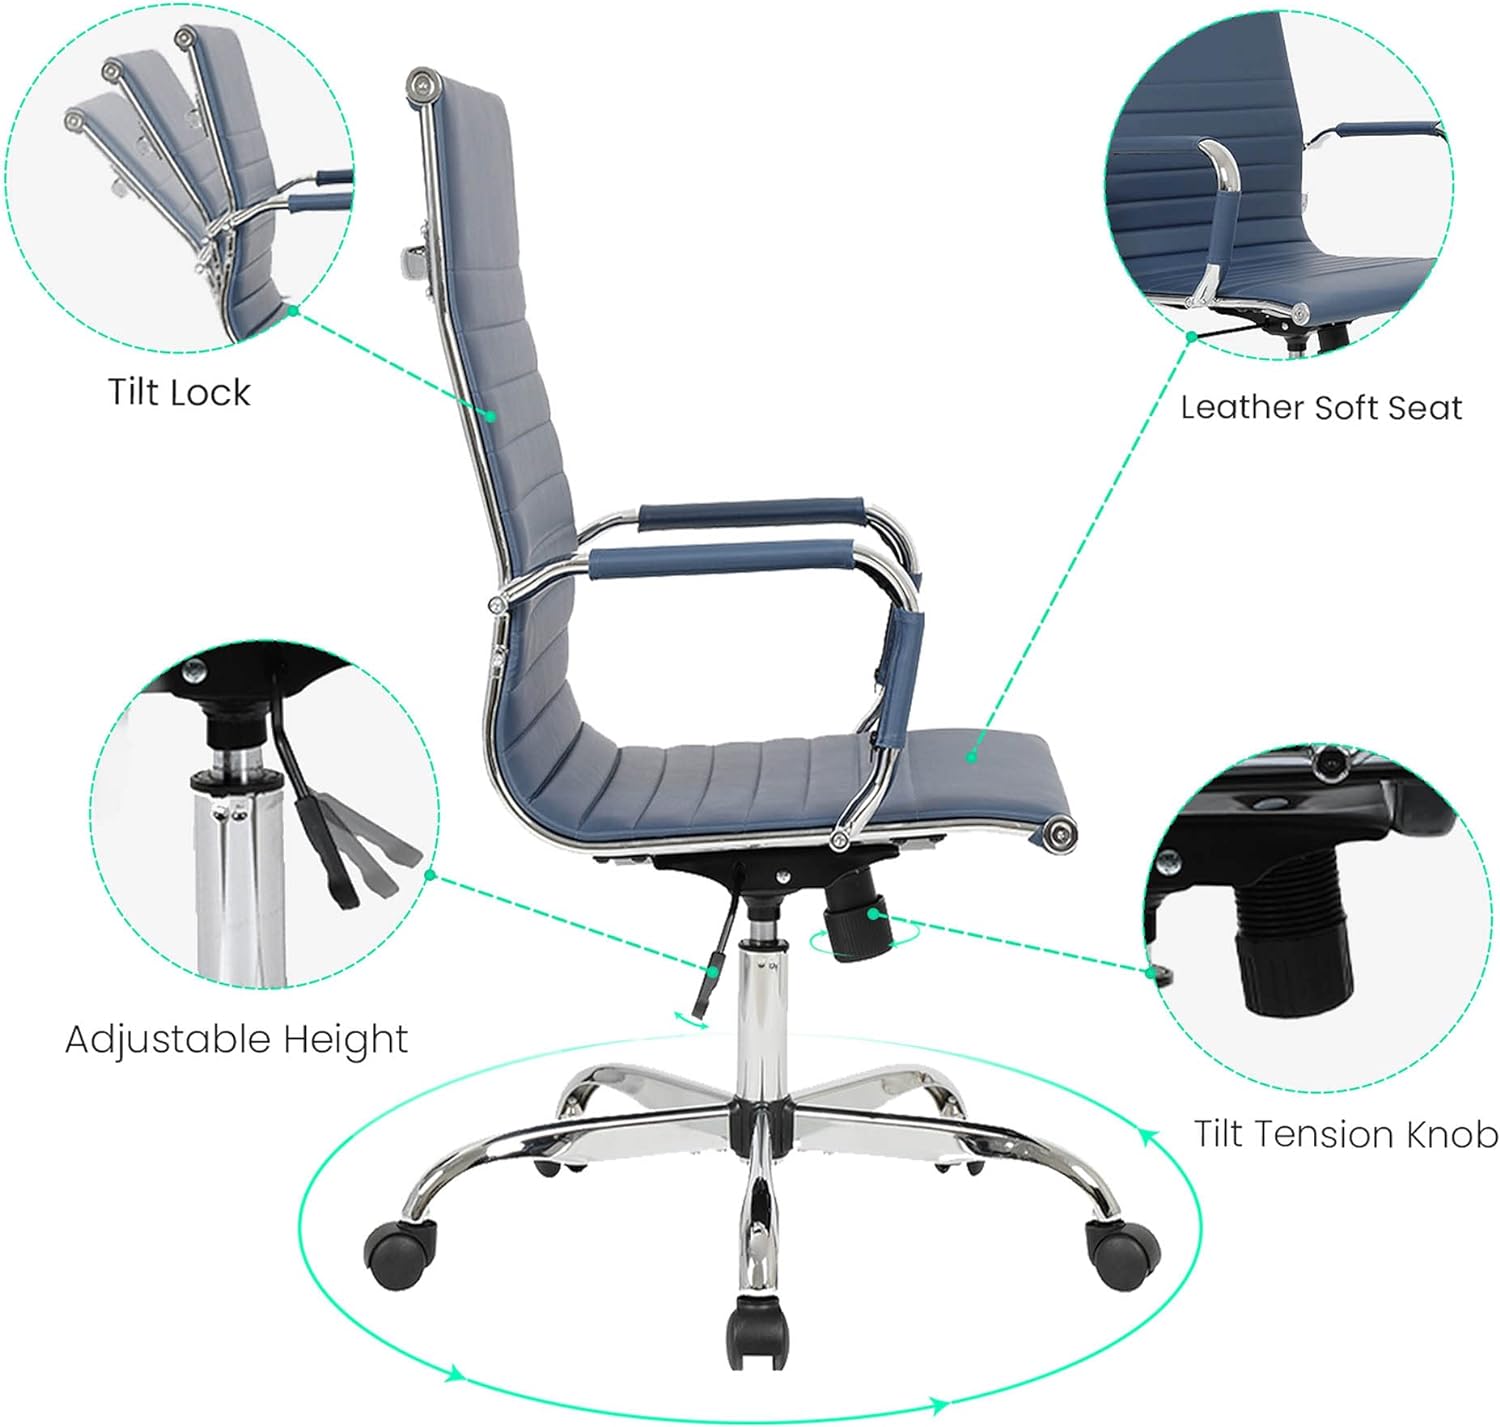 LeisureMod Harris Modern Adjustable Swivel Leather High-Back Task Office Chair, Navy Blue